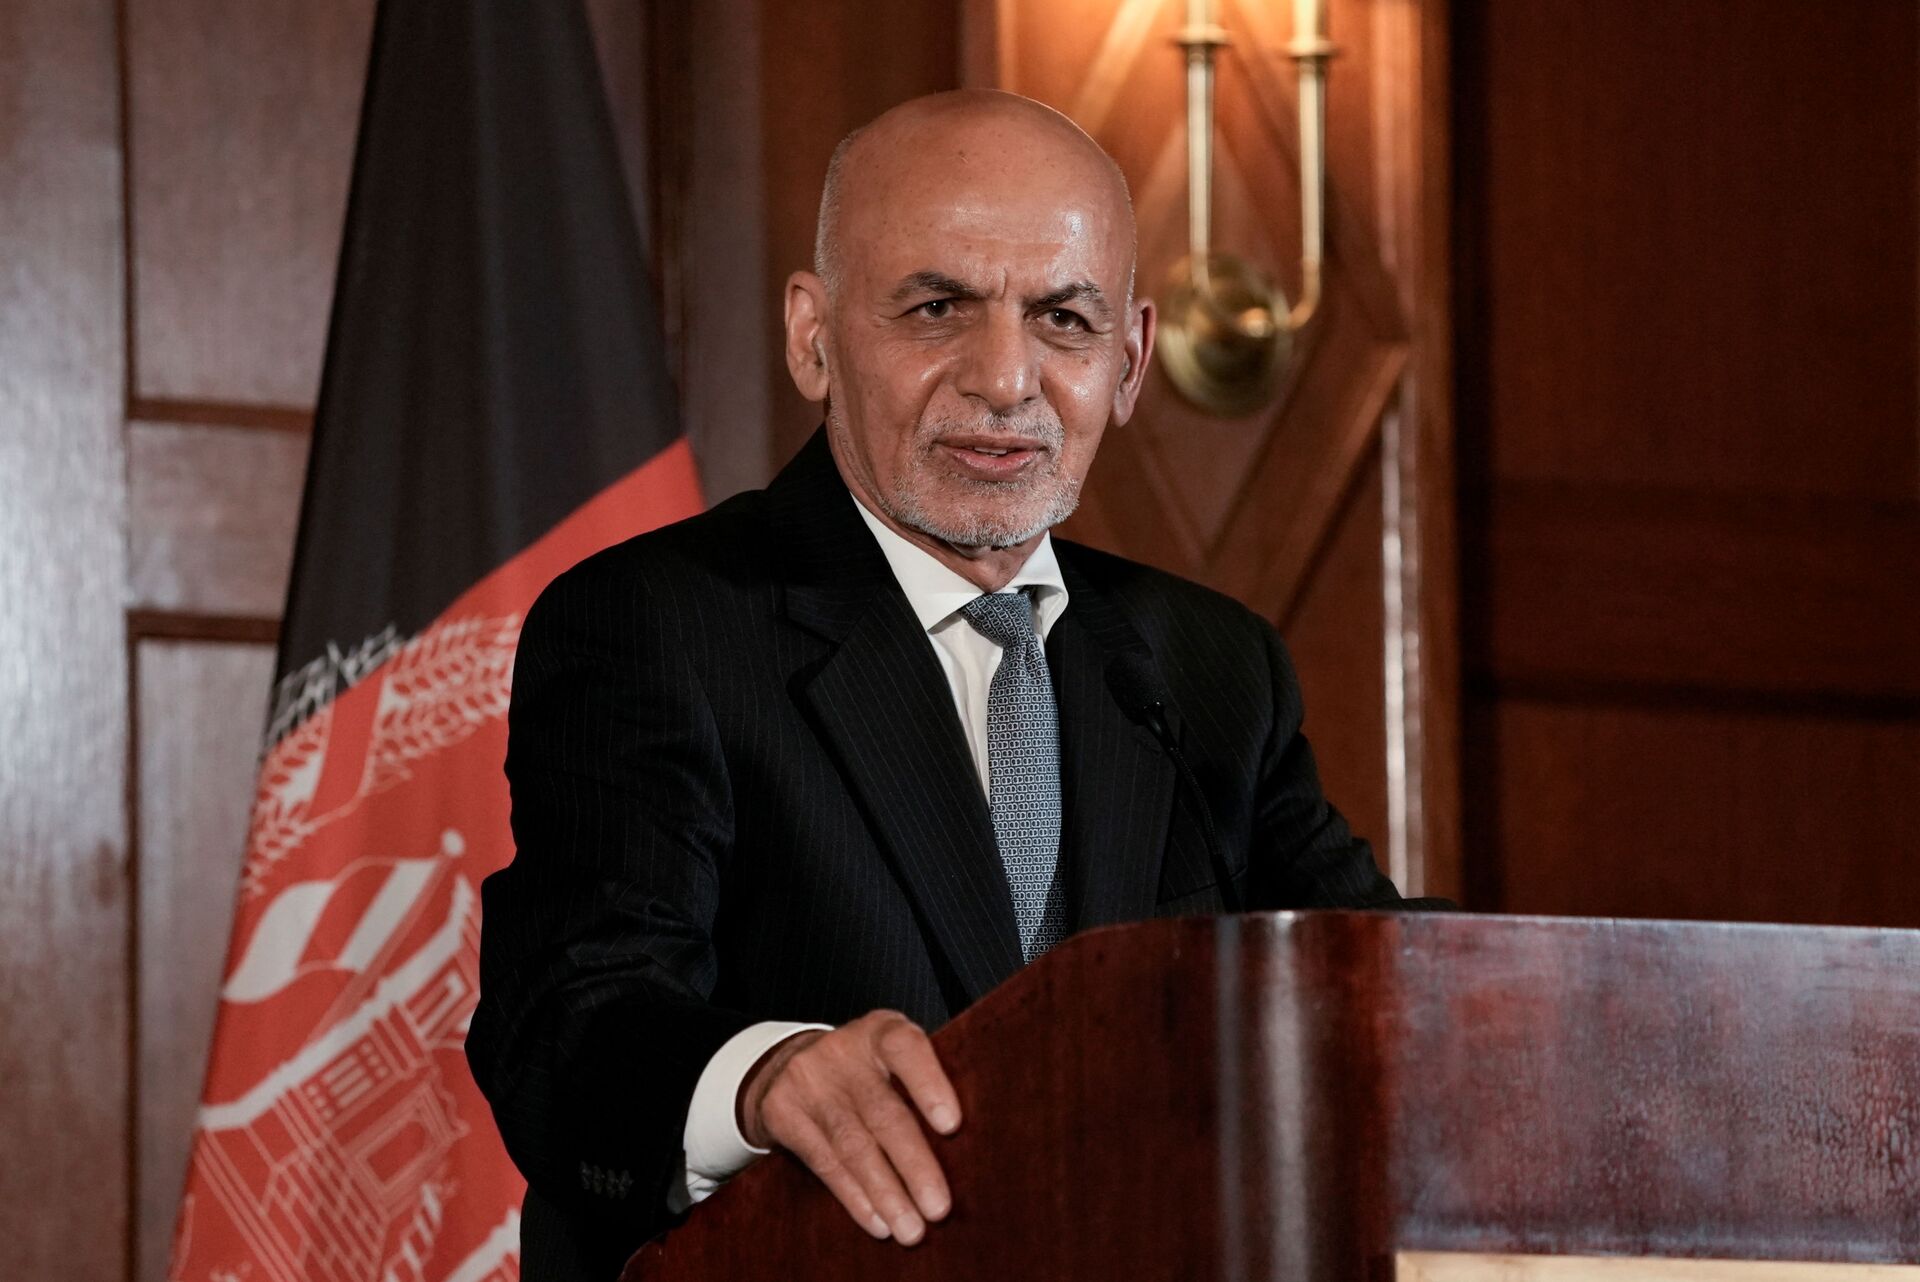 Afghanistan's President Ashraf Ghani speaks during a news conference following his meeting with U.S. President Joe Biden, at the Willard Hotel in Washington, D.C., U.S., June 25, 2021 - Sputnik International, 1920, 07.09.2021